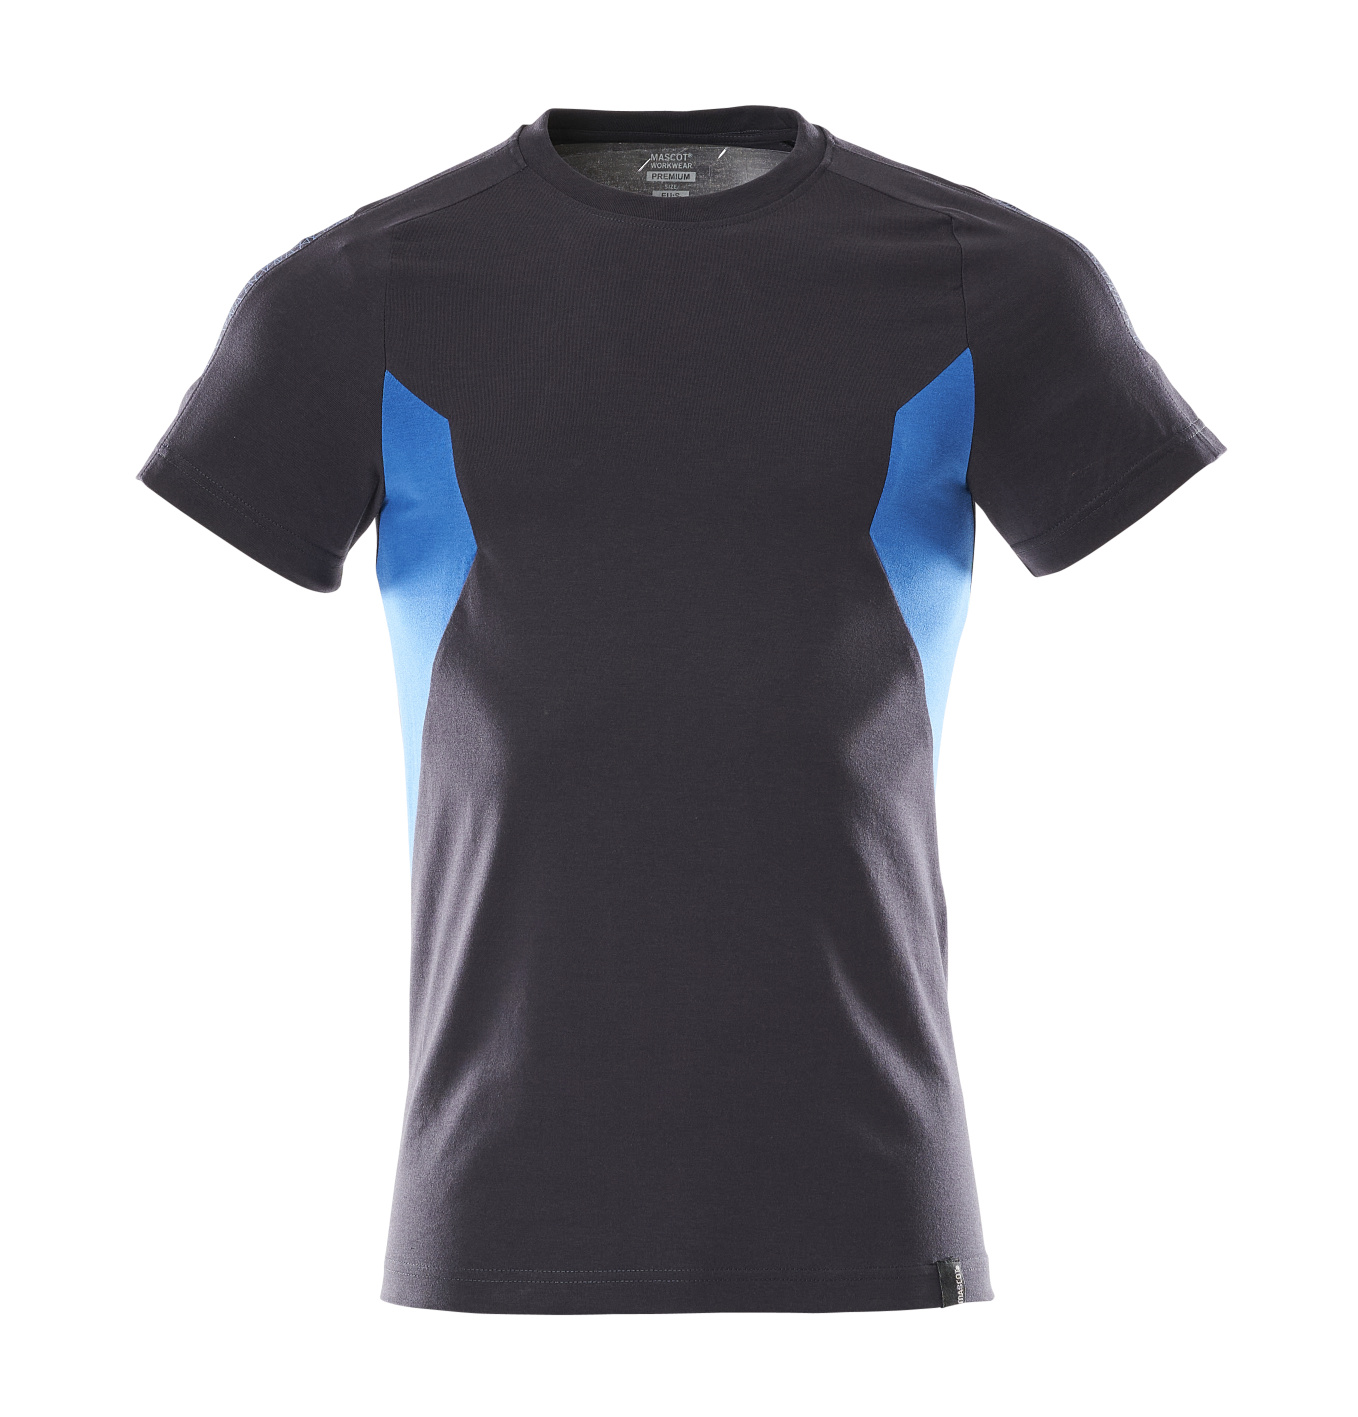 MASCOT Accelerate T-Shirt Nr. 18382-959-01091